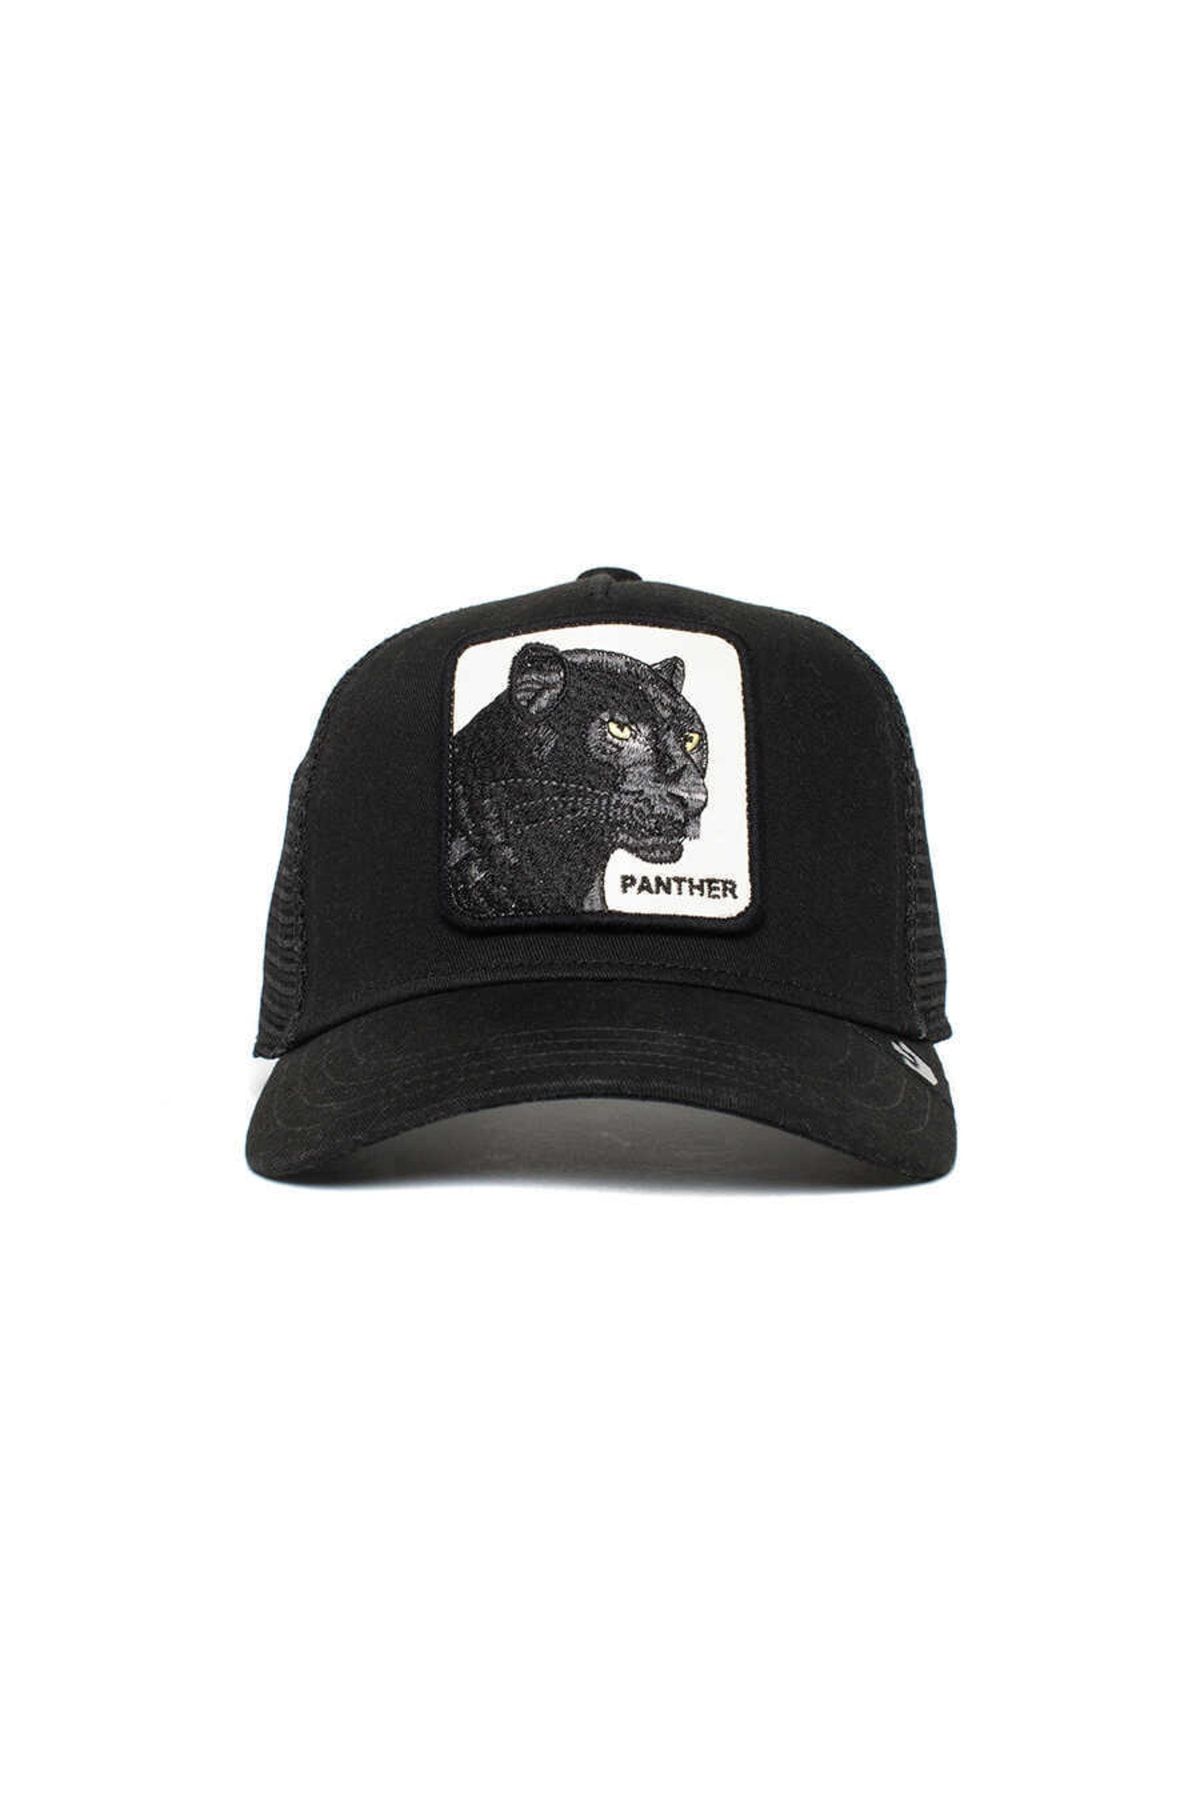 Goorin Bros کلاه بچه پلنگ Cub (Panther Figured) 201-0030 مشکی Standard